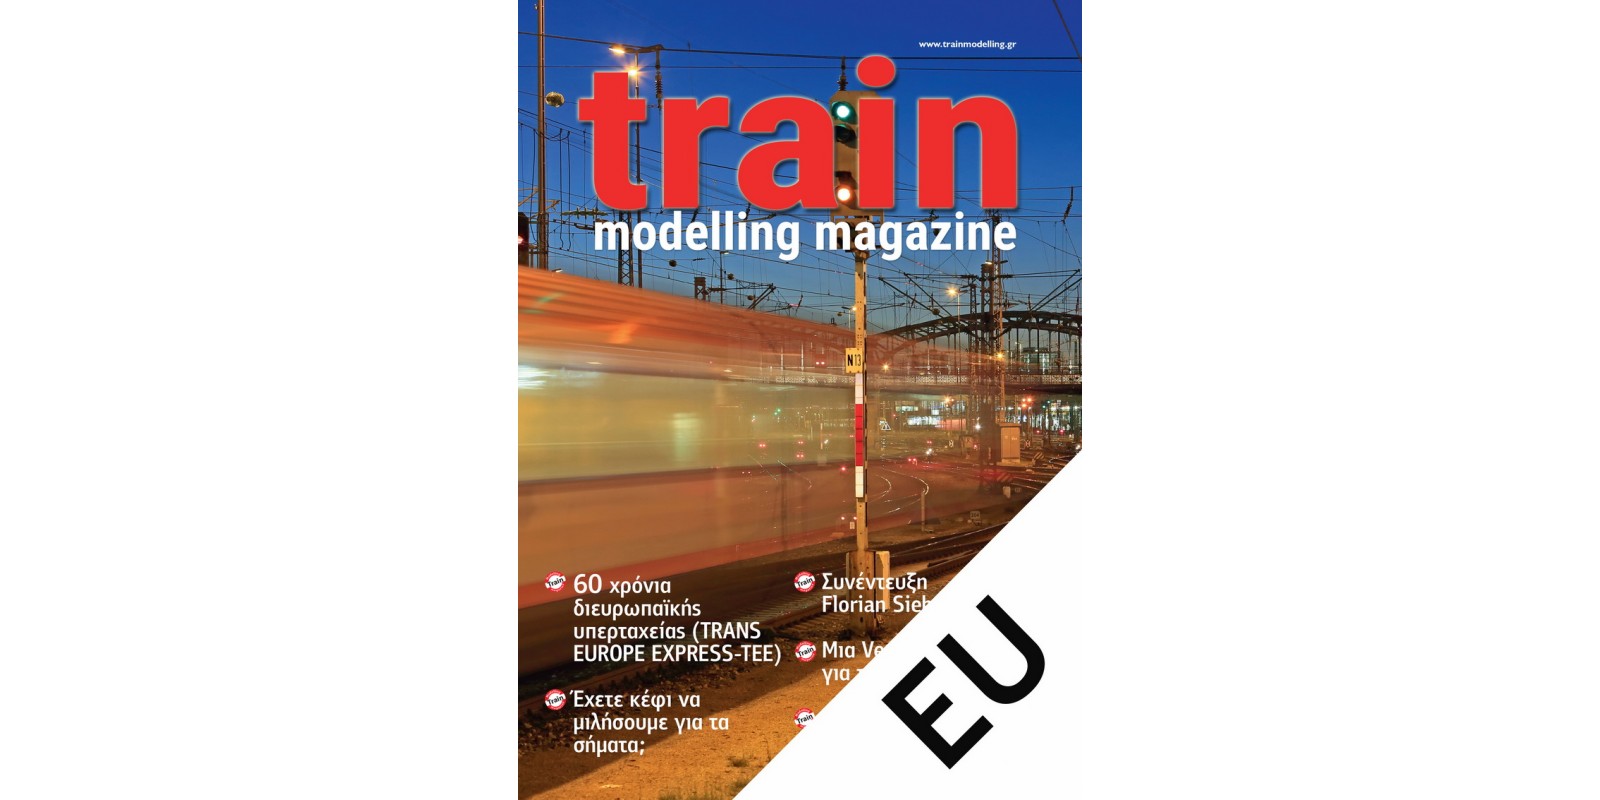 TMMSUB-EUR Ετήσια Συνδρομή (6 διμηνιαία τεύχη) στο Περιοδικό Train Modelling Magazine (ελληνική έκδοση) για παράδοση εντός Ευρώπης